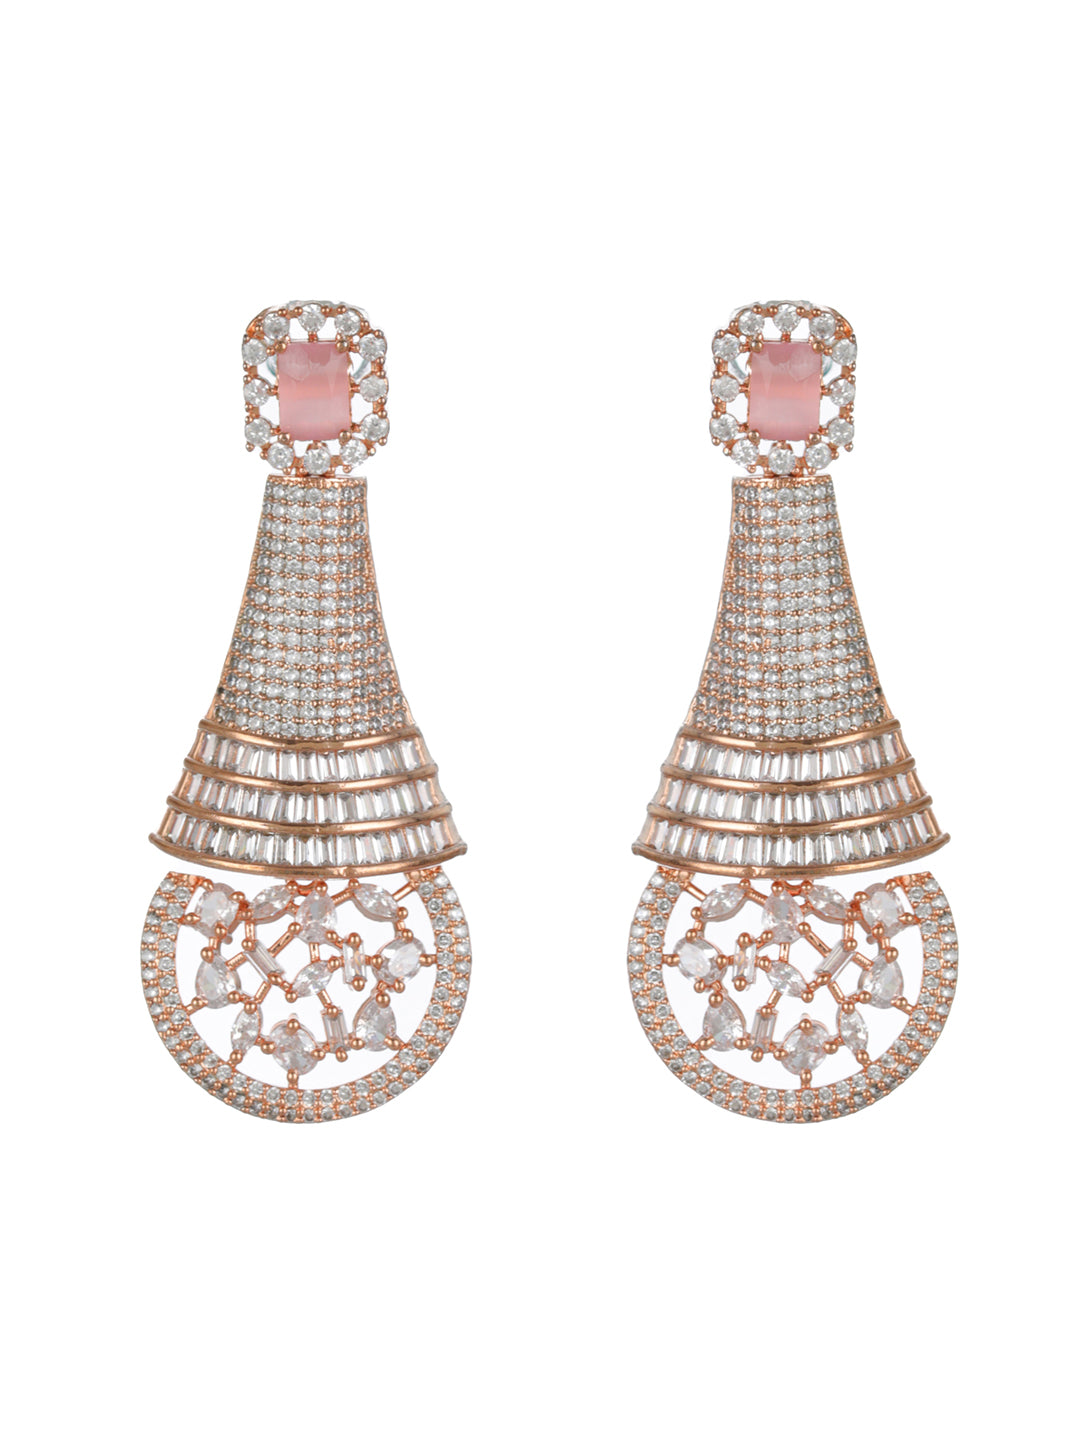 Priyaasi Pretty Pink Bell AD Rose Gold-Plated Drop Earrings